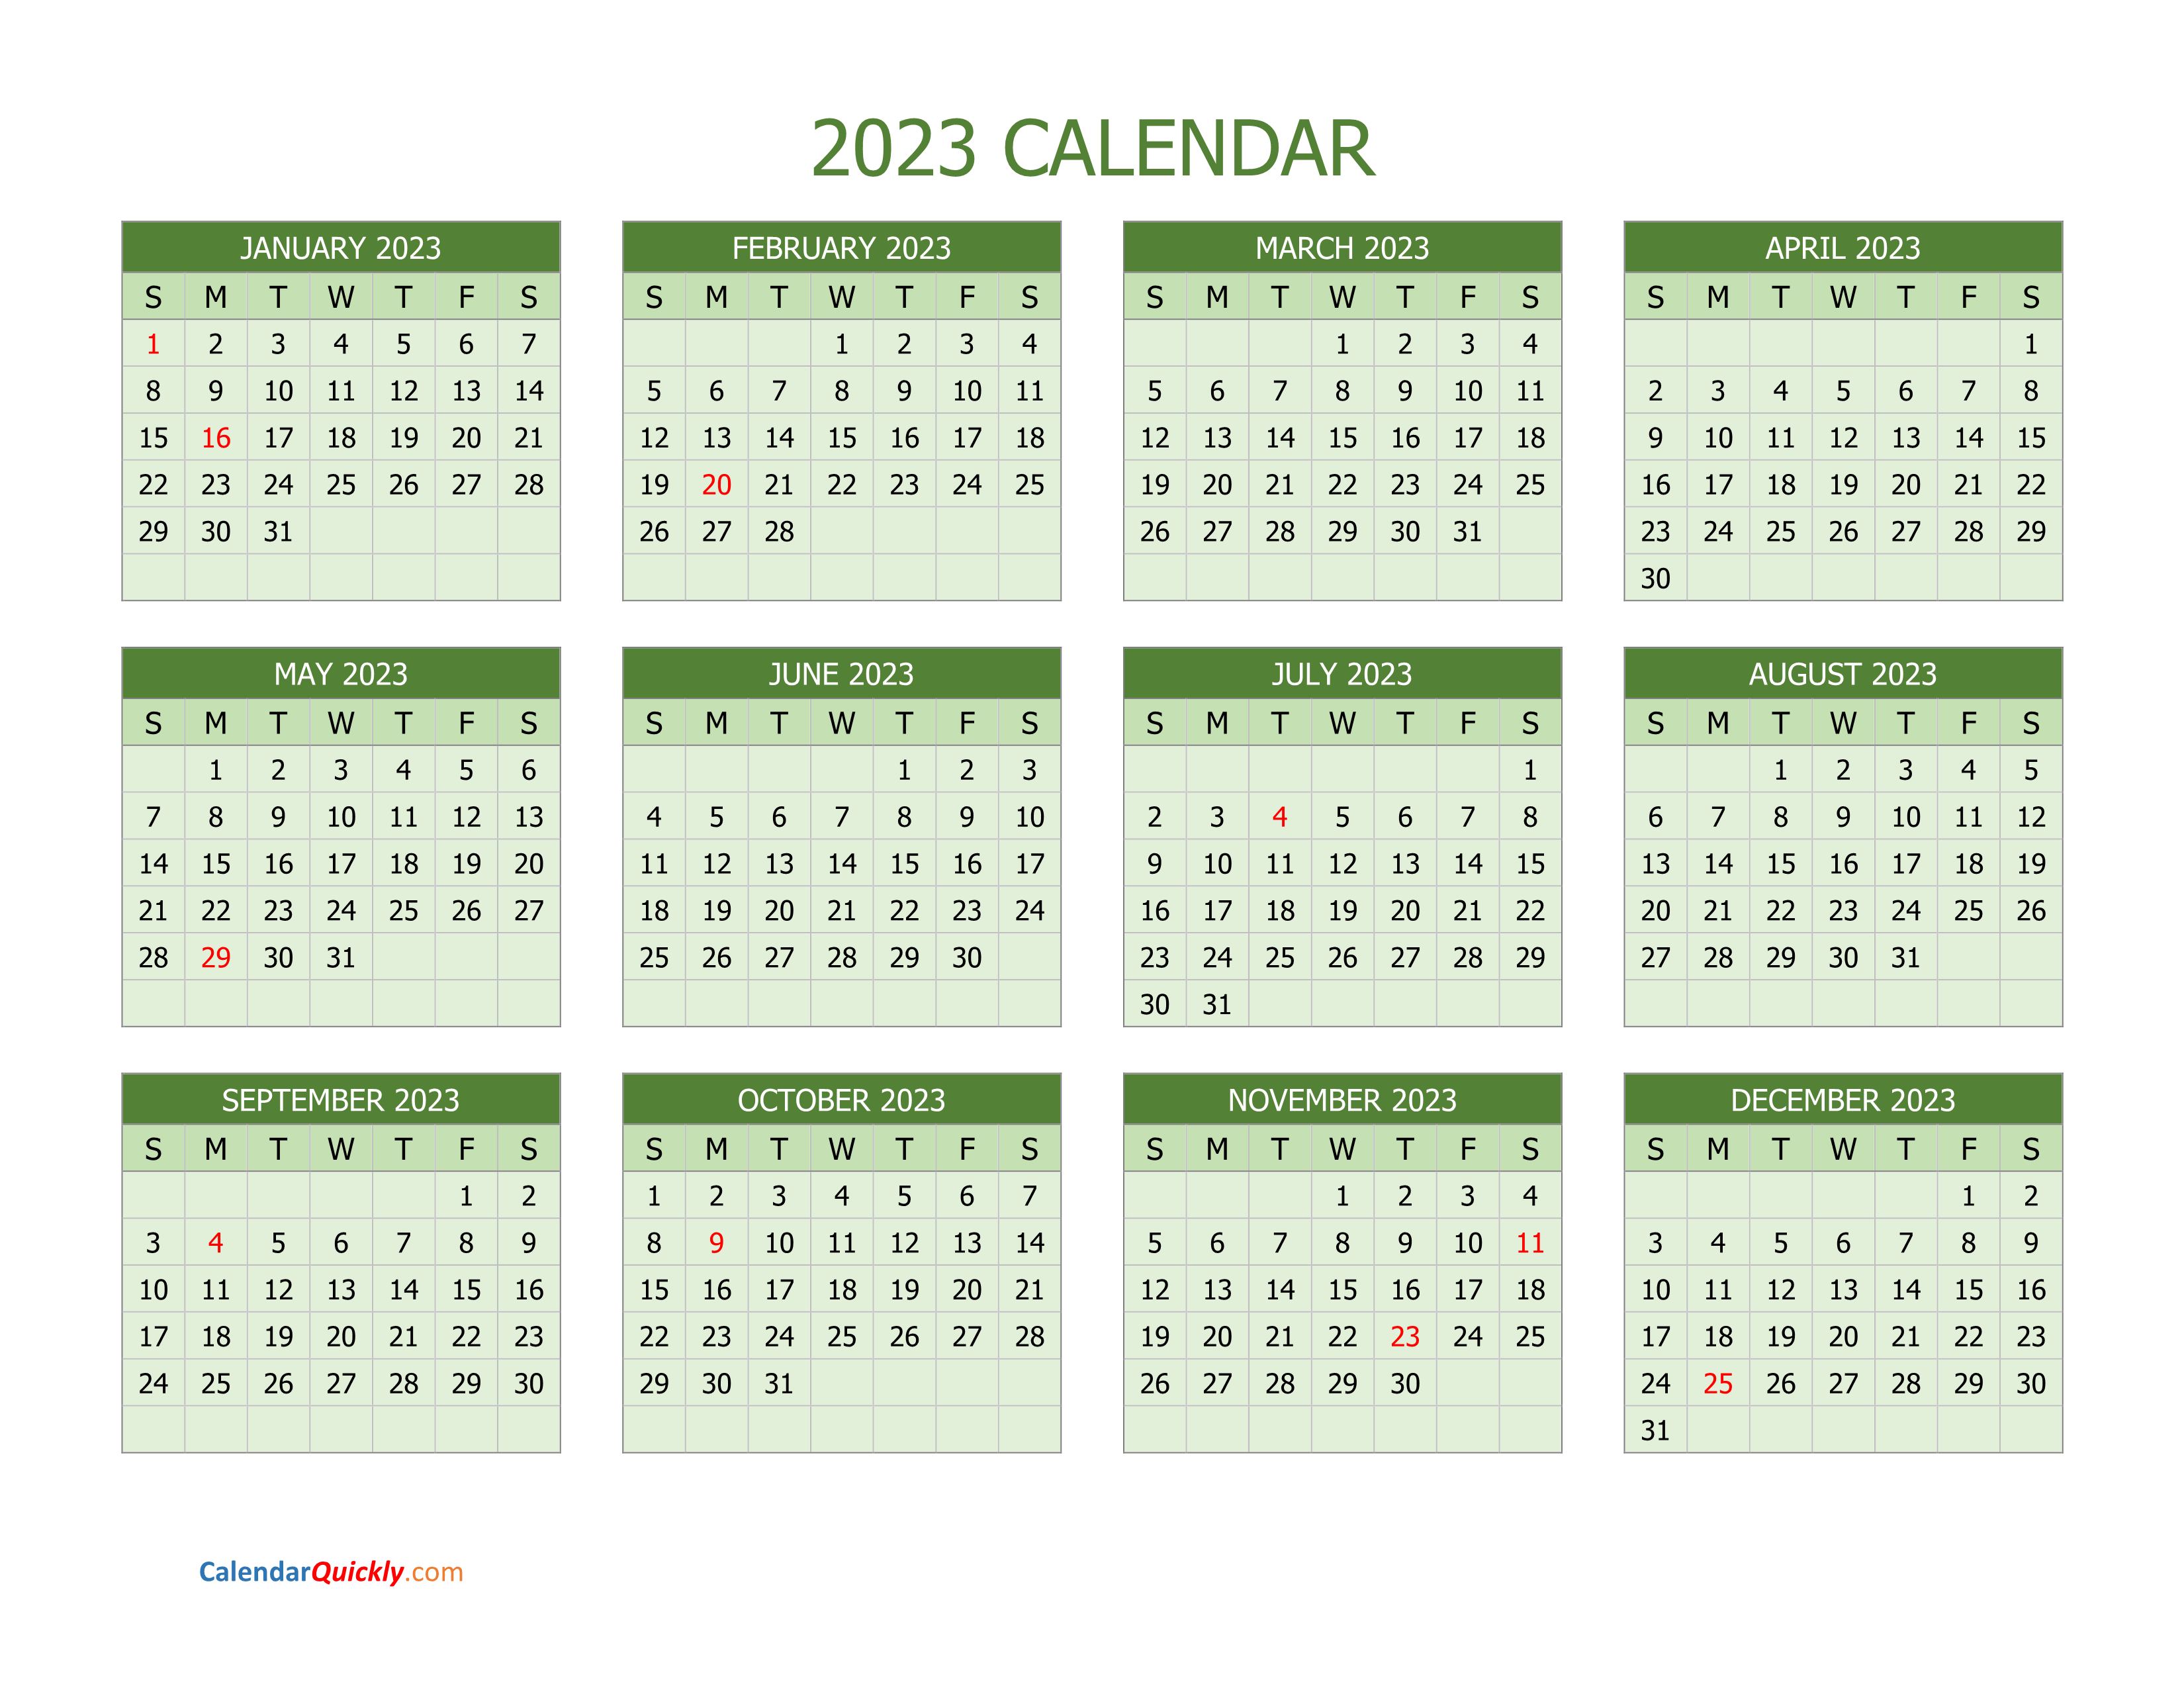 Yearly Calendar 2023 Calendar Quickly